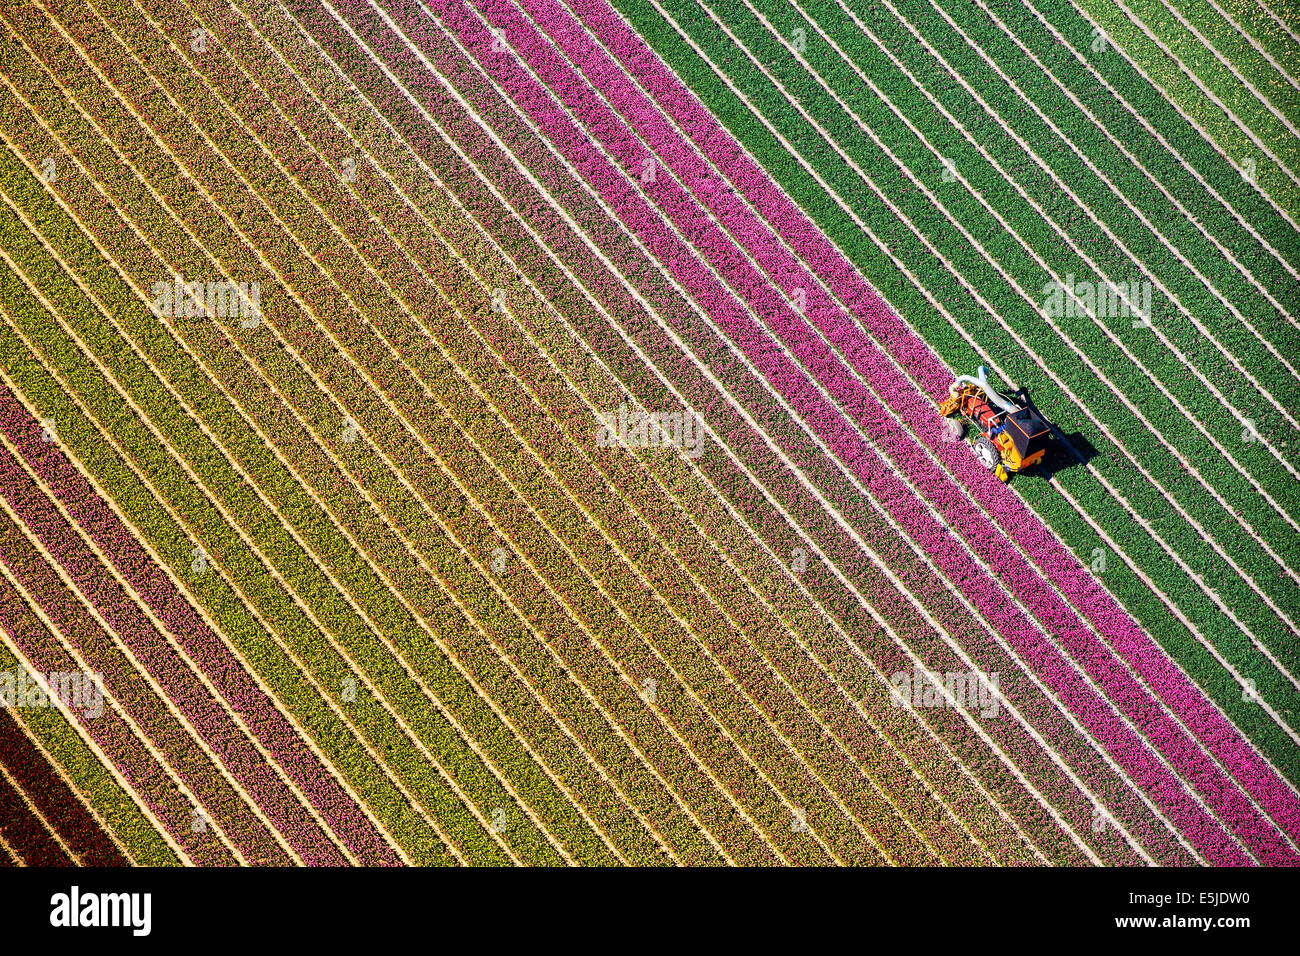 Netherlands, Burgervlotbrug, Tulip fields, Farmer topping tulips. Aerial Stock Photo